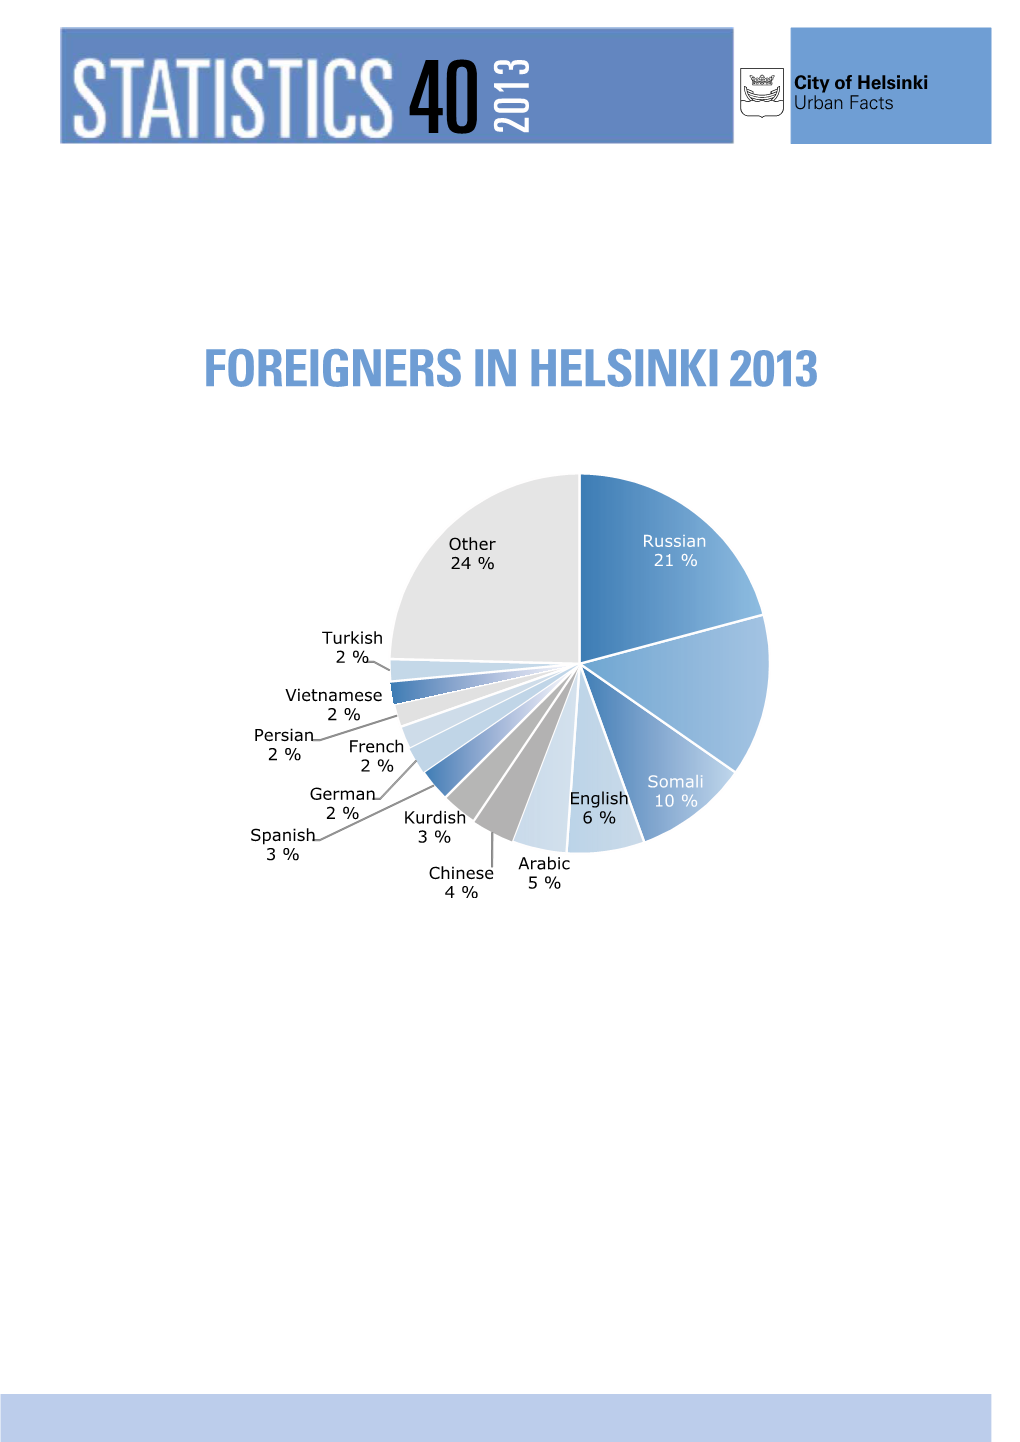 Foreigners in Helsinki 2013